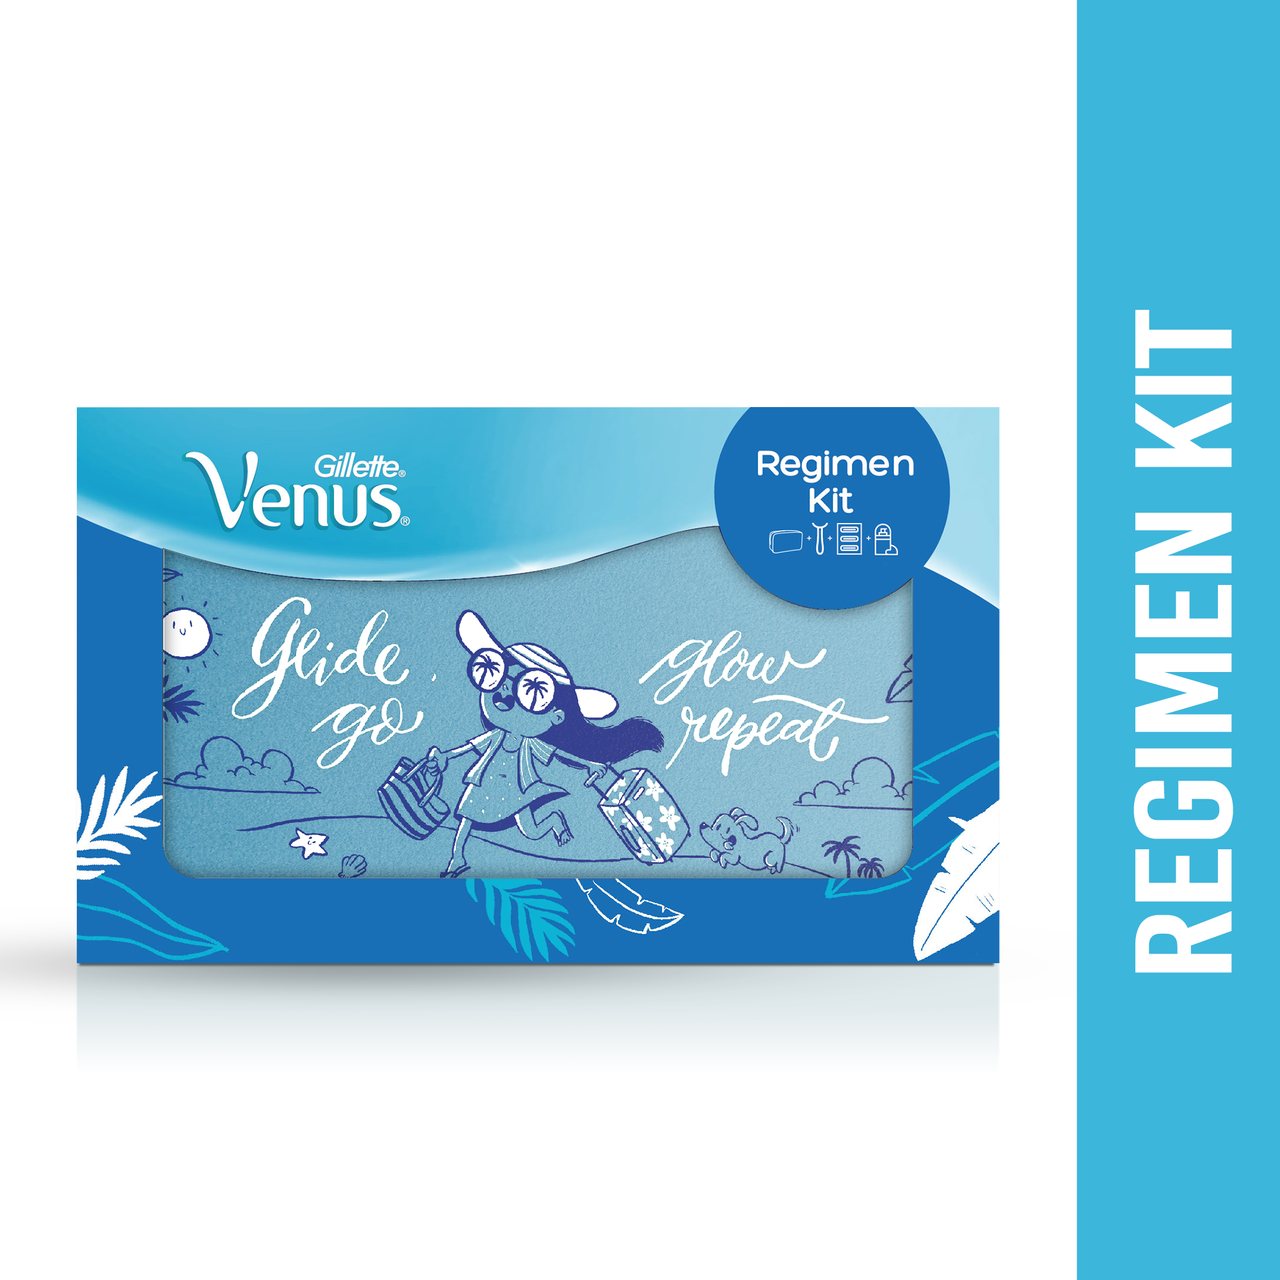 Venus Hair Removal Regimen Kit